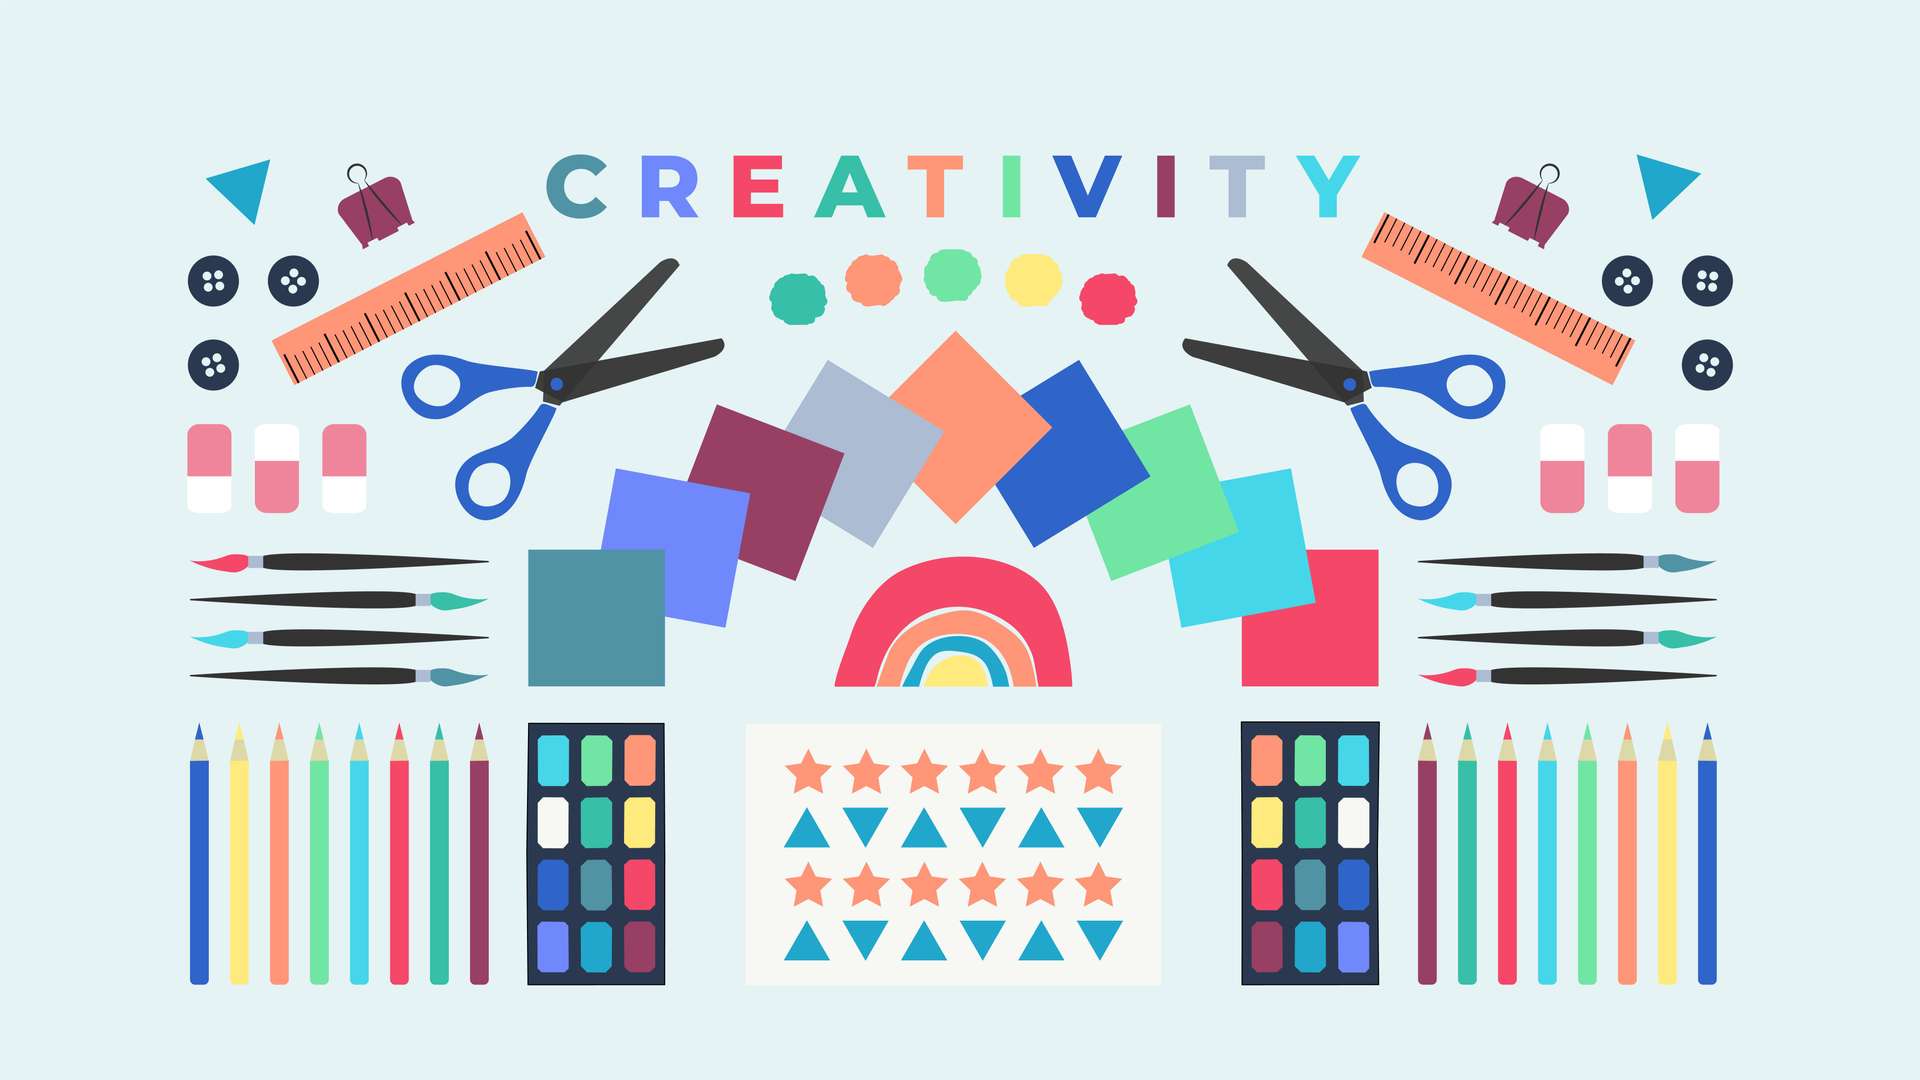 'Creativity' and children's art supplies